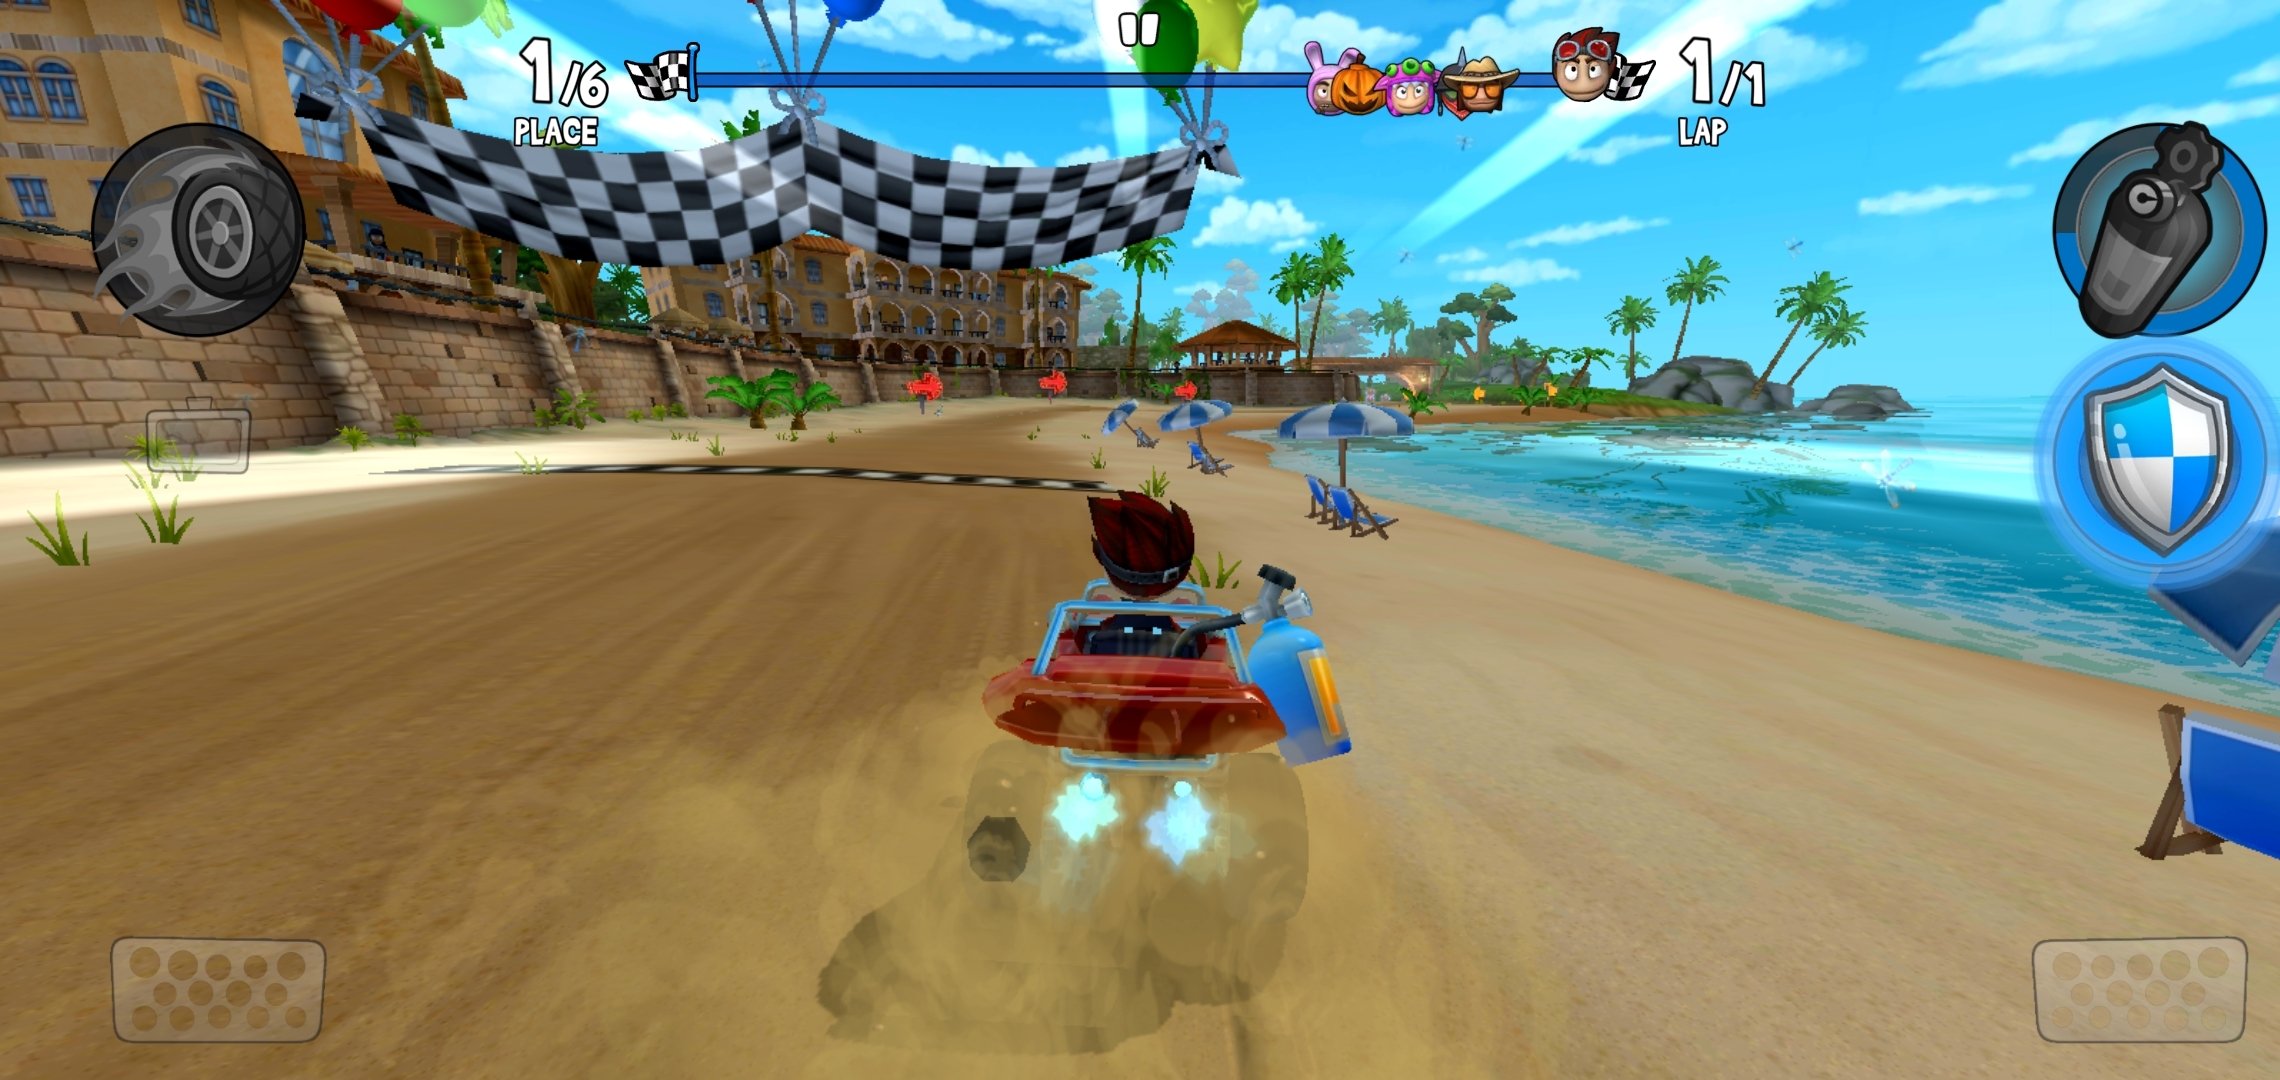 beach buggy racing 2 apk hackeado